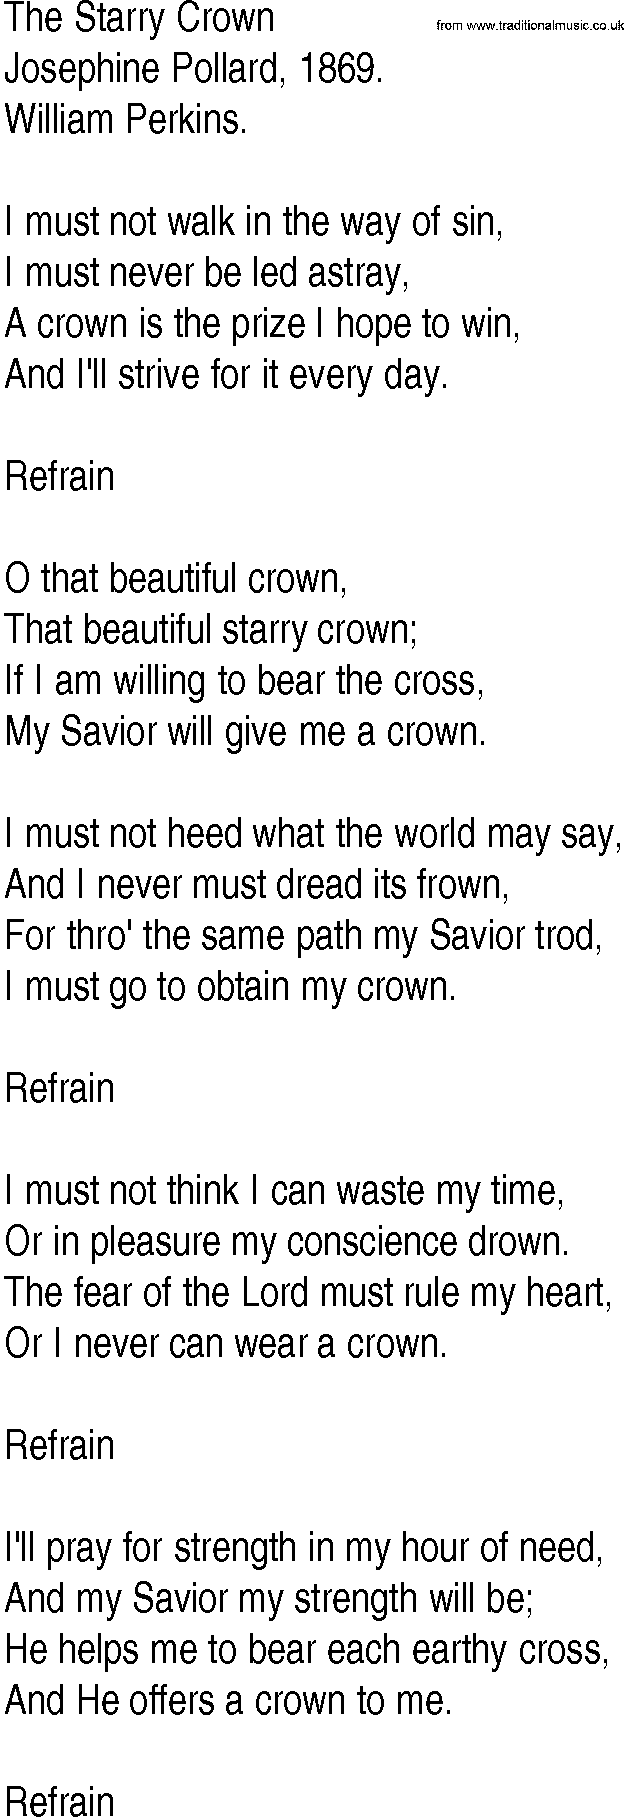 Hymn and Gospel Song: The Starry Crown by Josephine Pollard lyrics